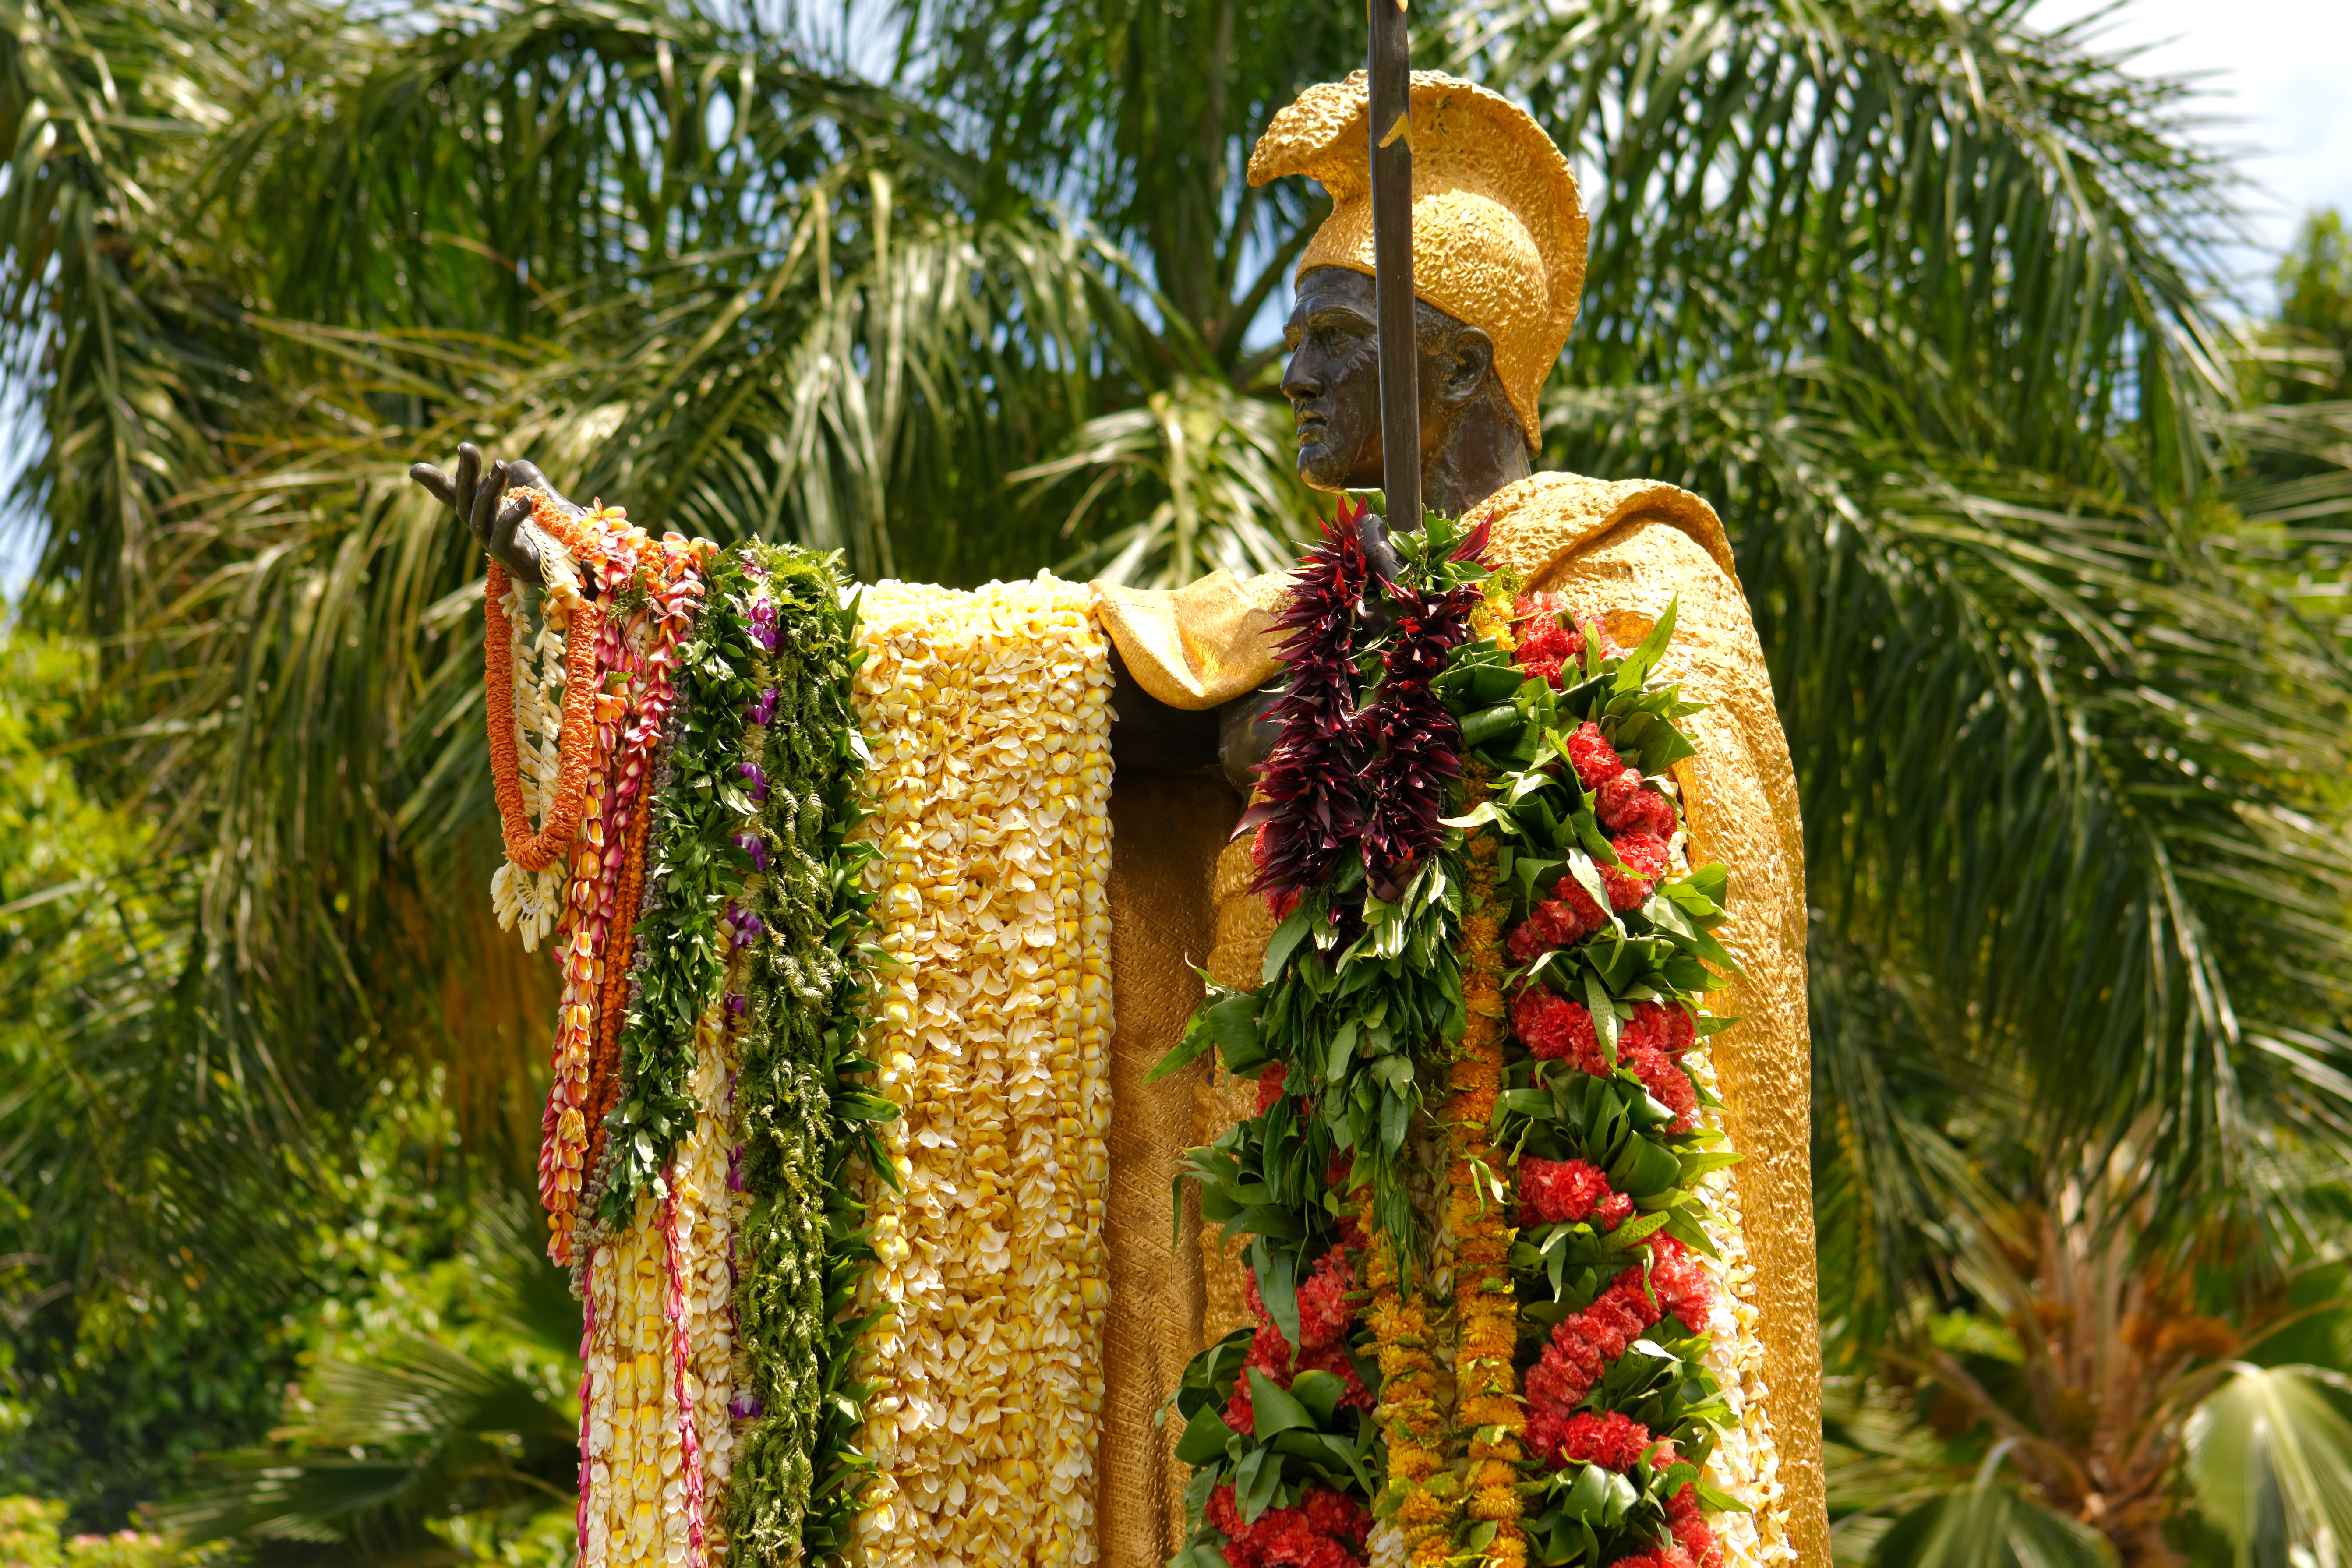 King Kamehameha Statue - Leis Closeup by Daniel Ramirez is licensed under CC BY 2.0